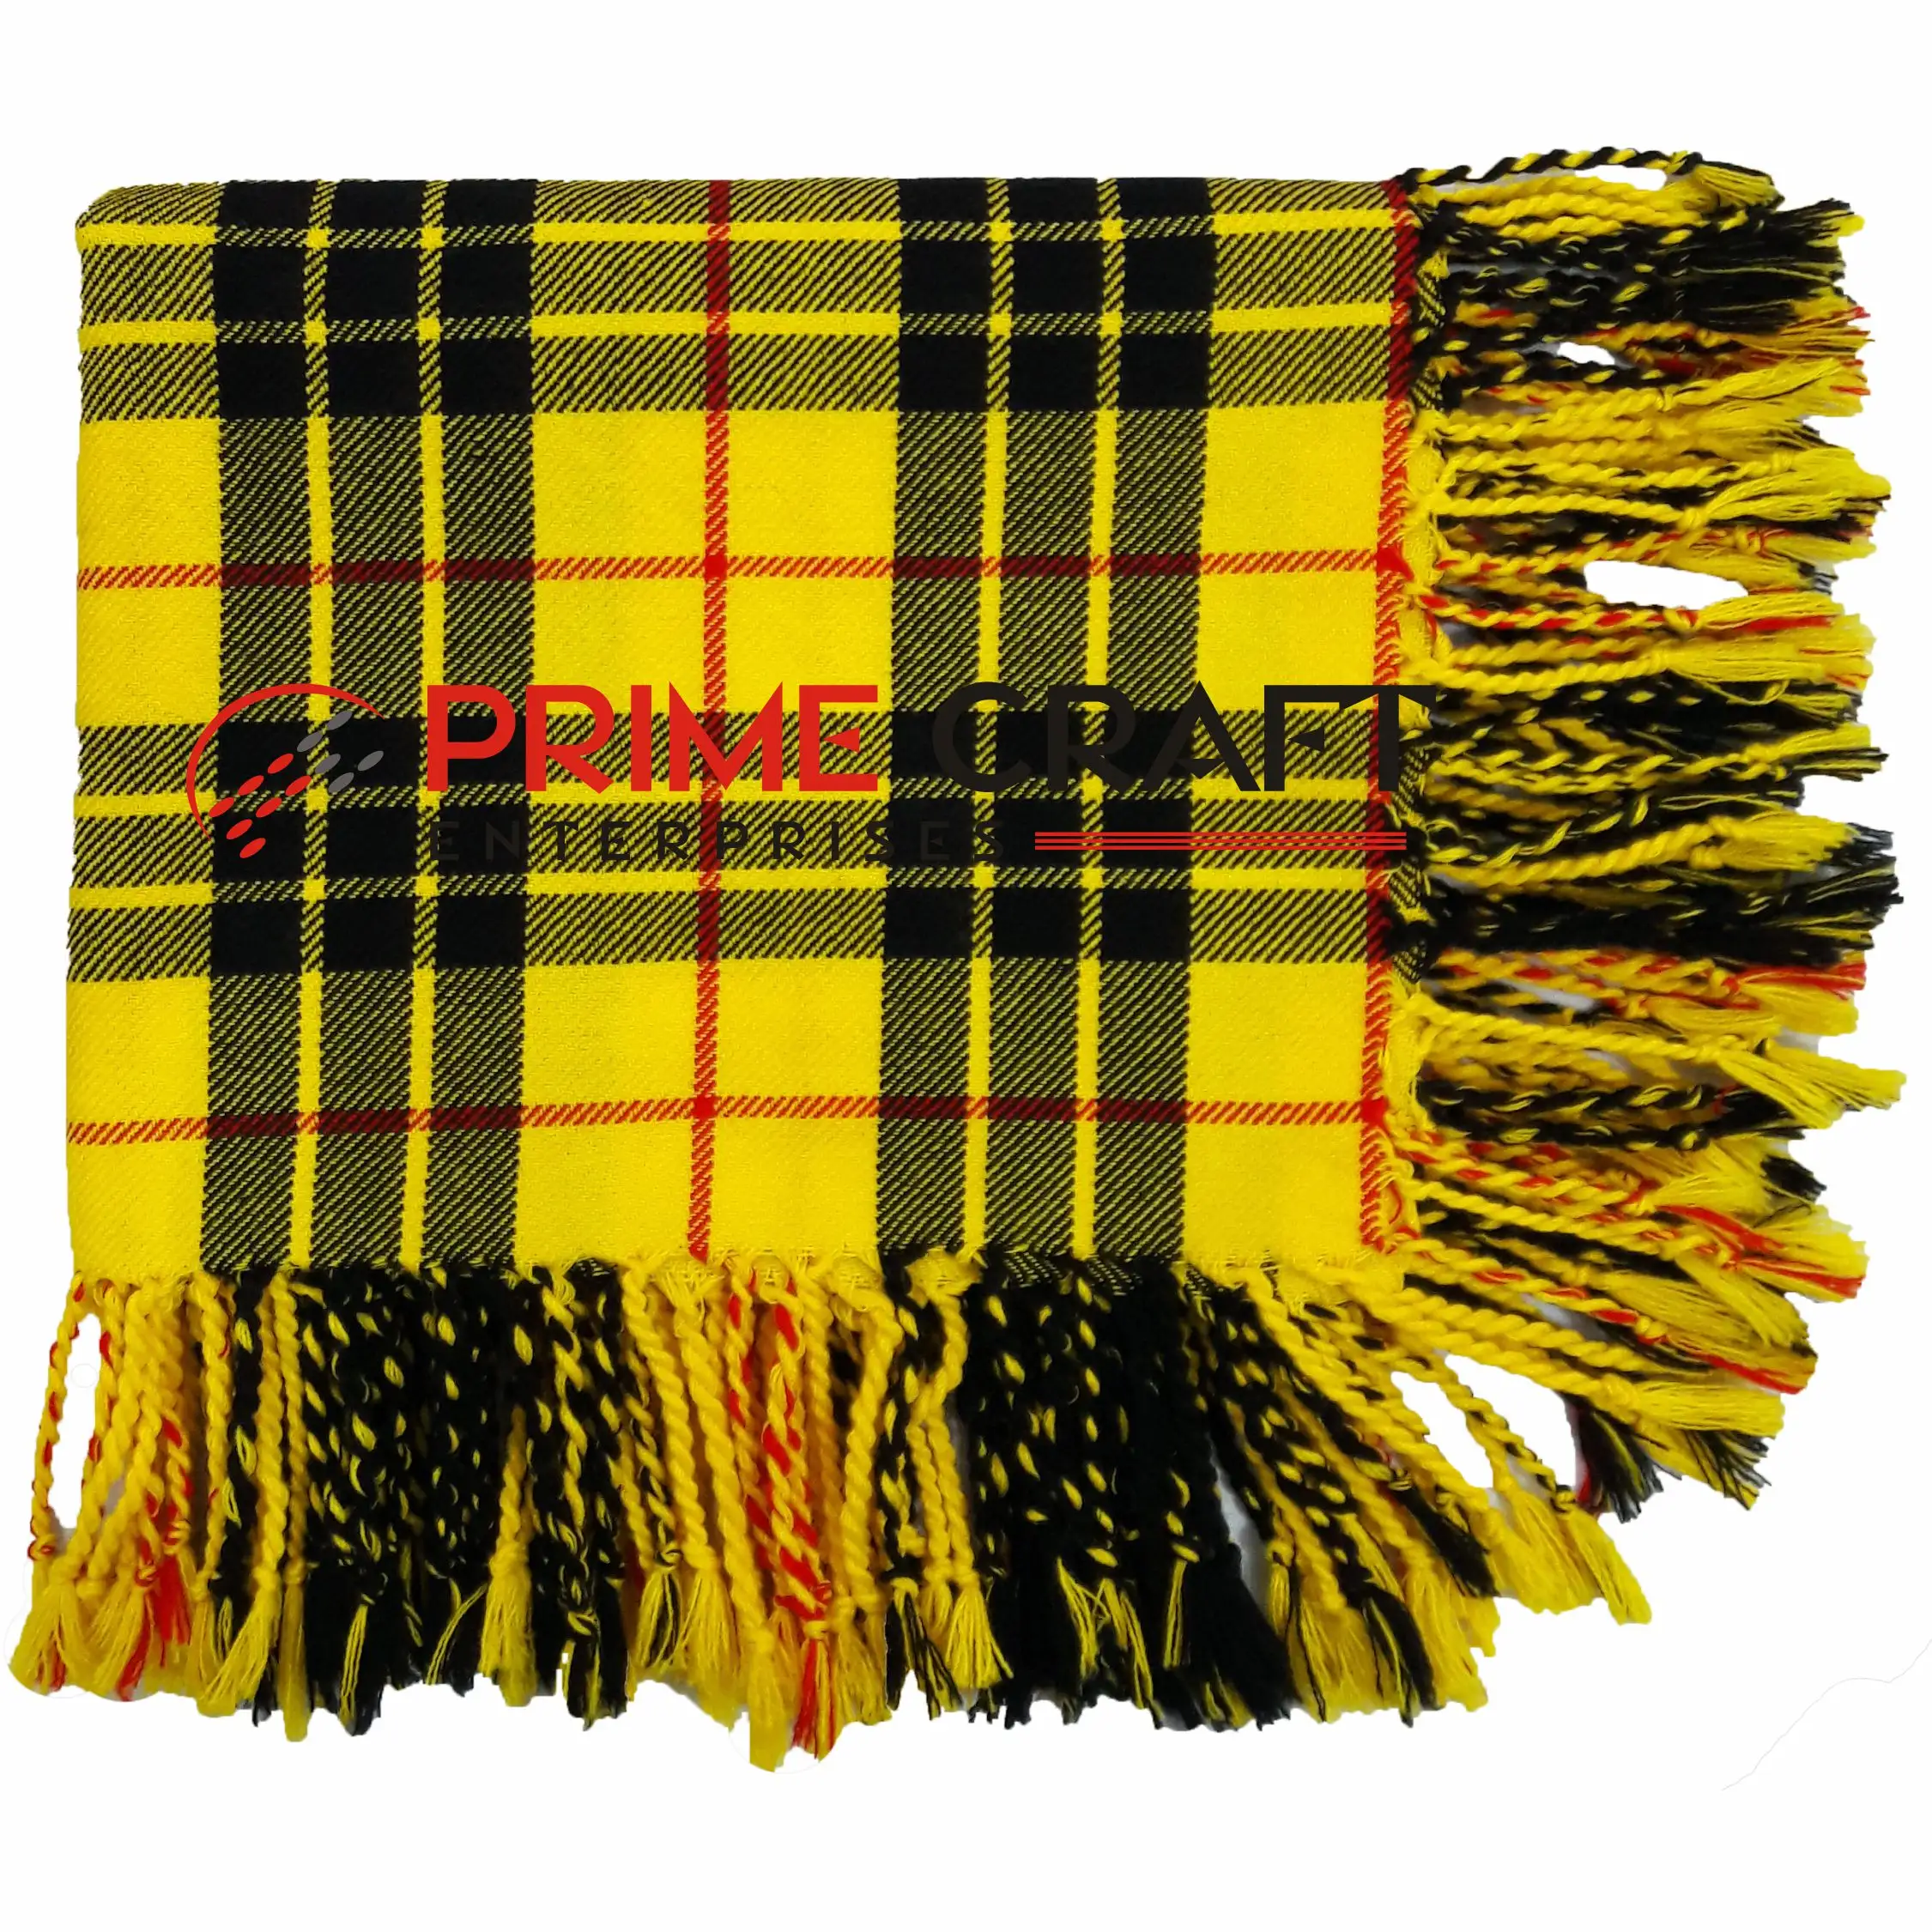 Brand New Kilt Fly Plaid Tartan 48"X48" Acrylic Highland Kilt Scottish Musical Traditional Kilt Wool Scarf